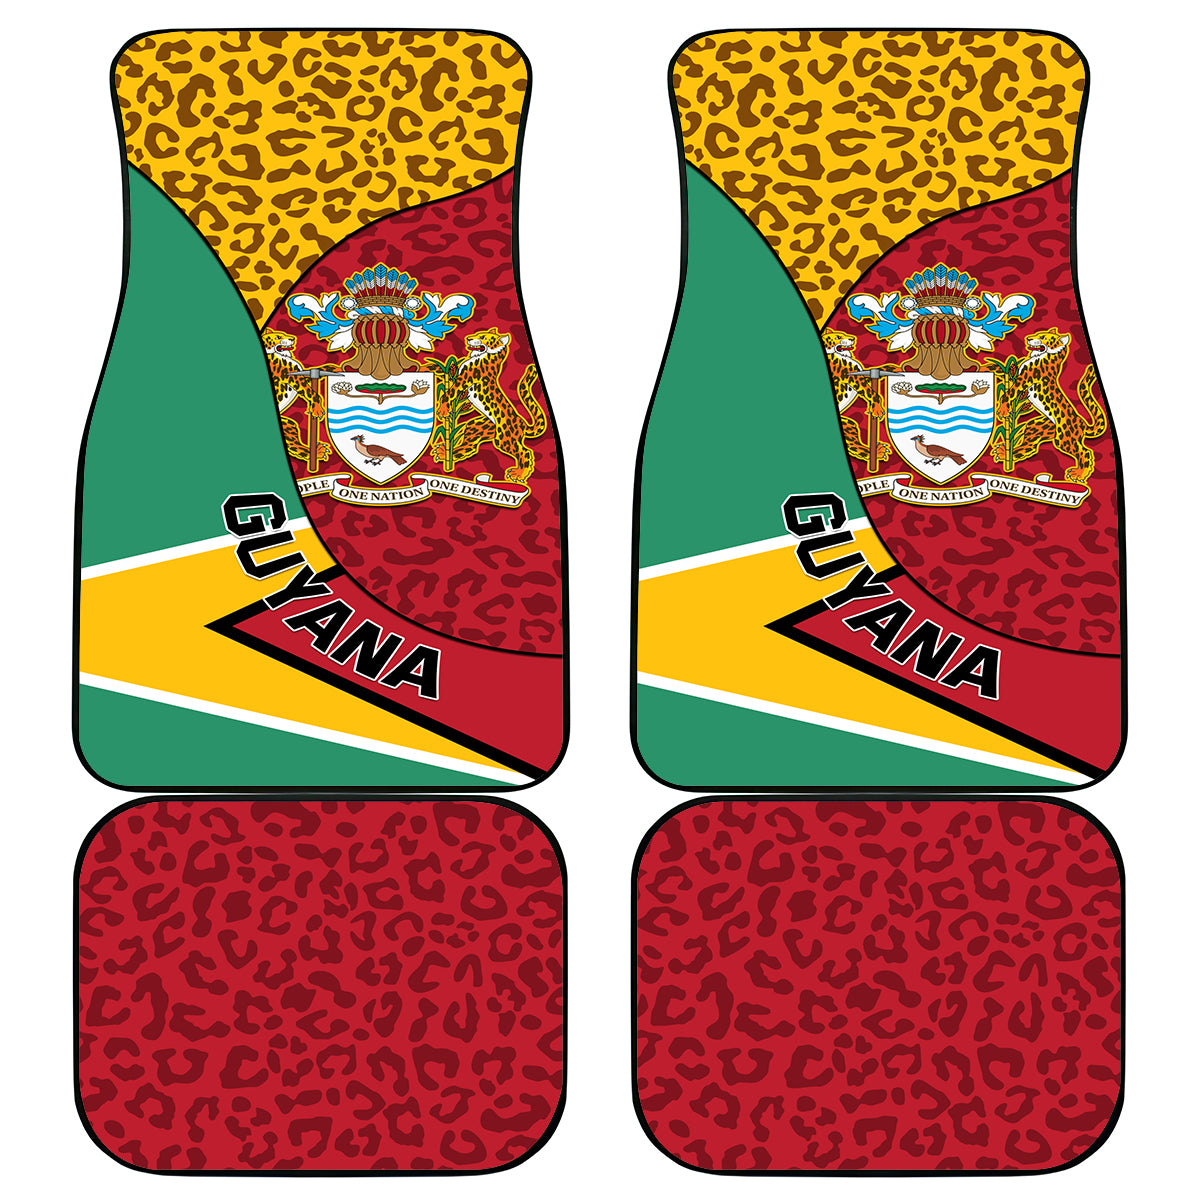 Guyana Republic Day Car Mats Coat Of Arms Leopard Pattern